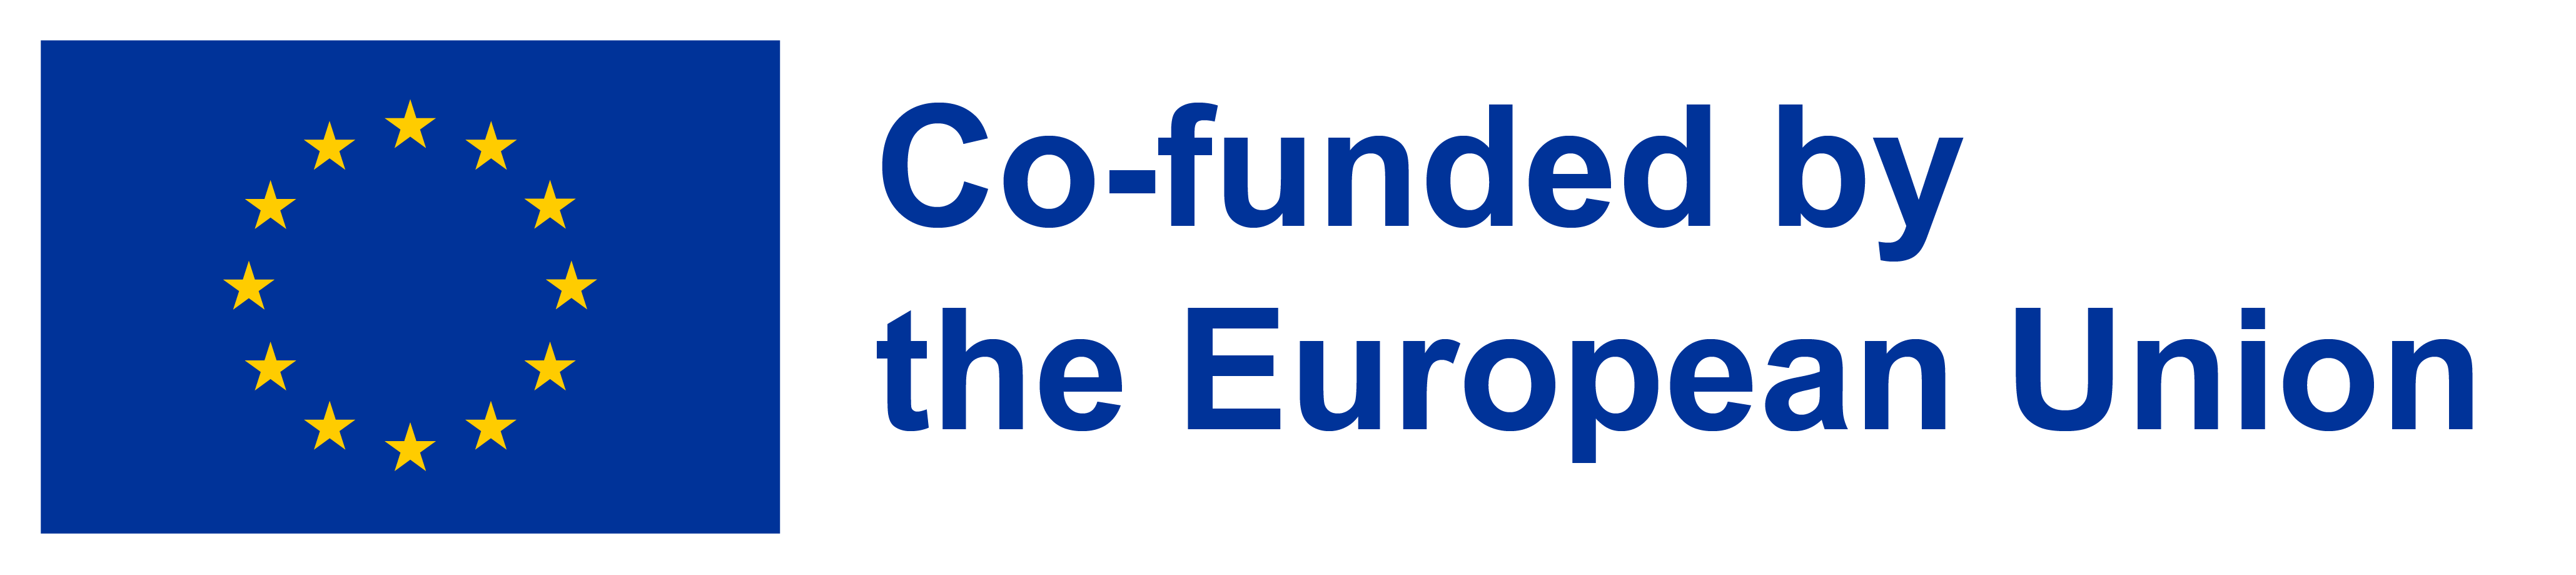 Go-funded by EU logo